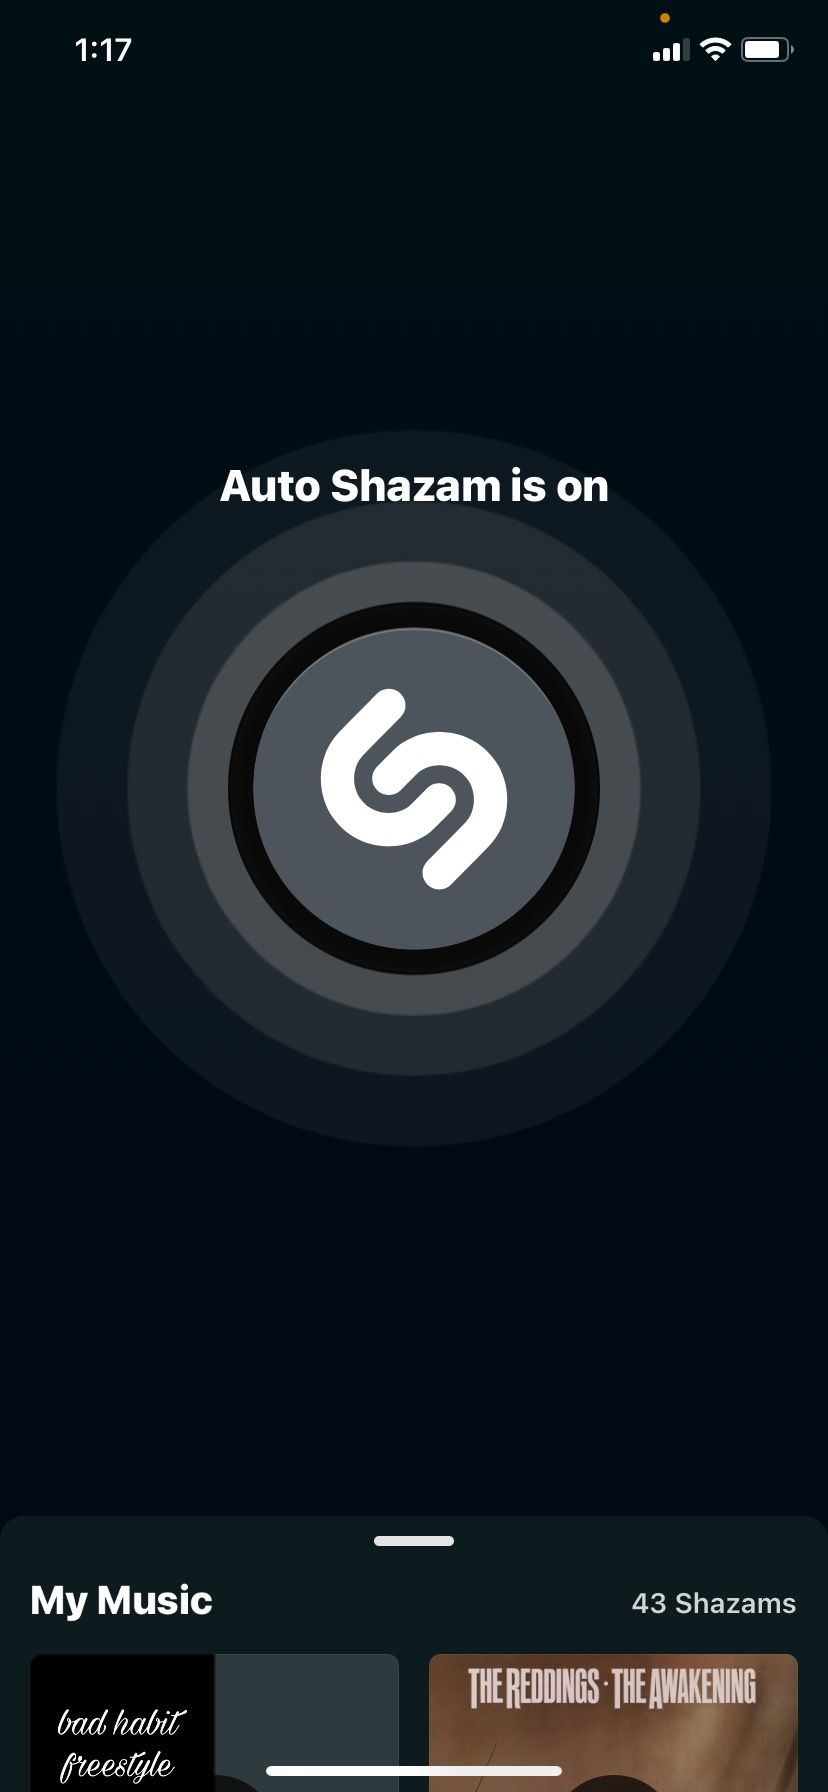 Auto Shazam